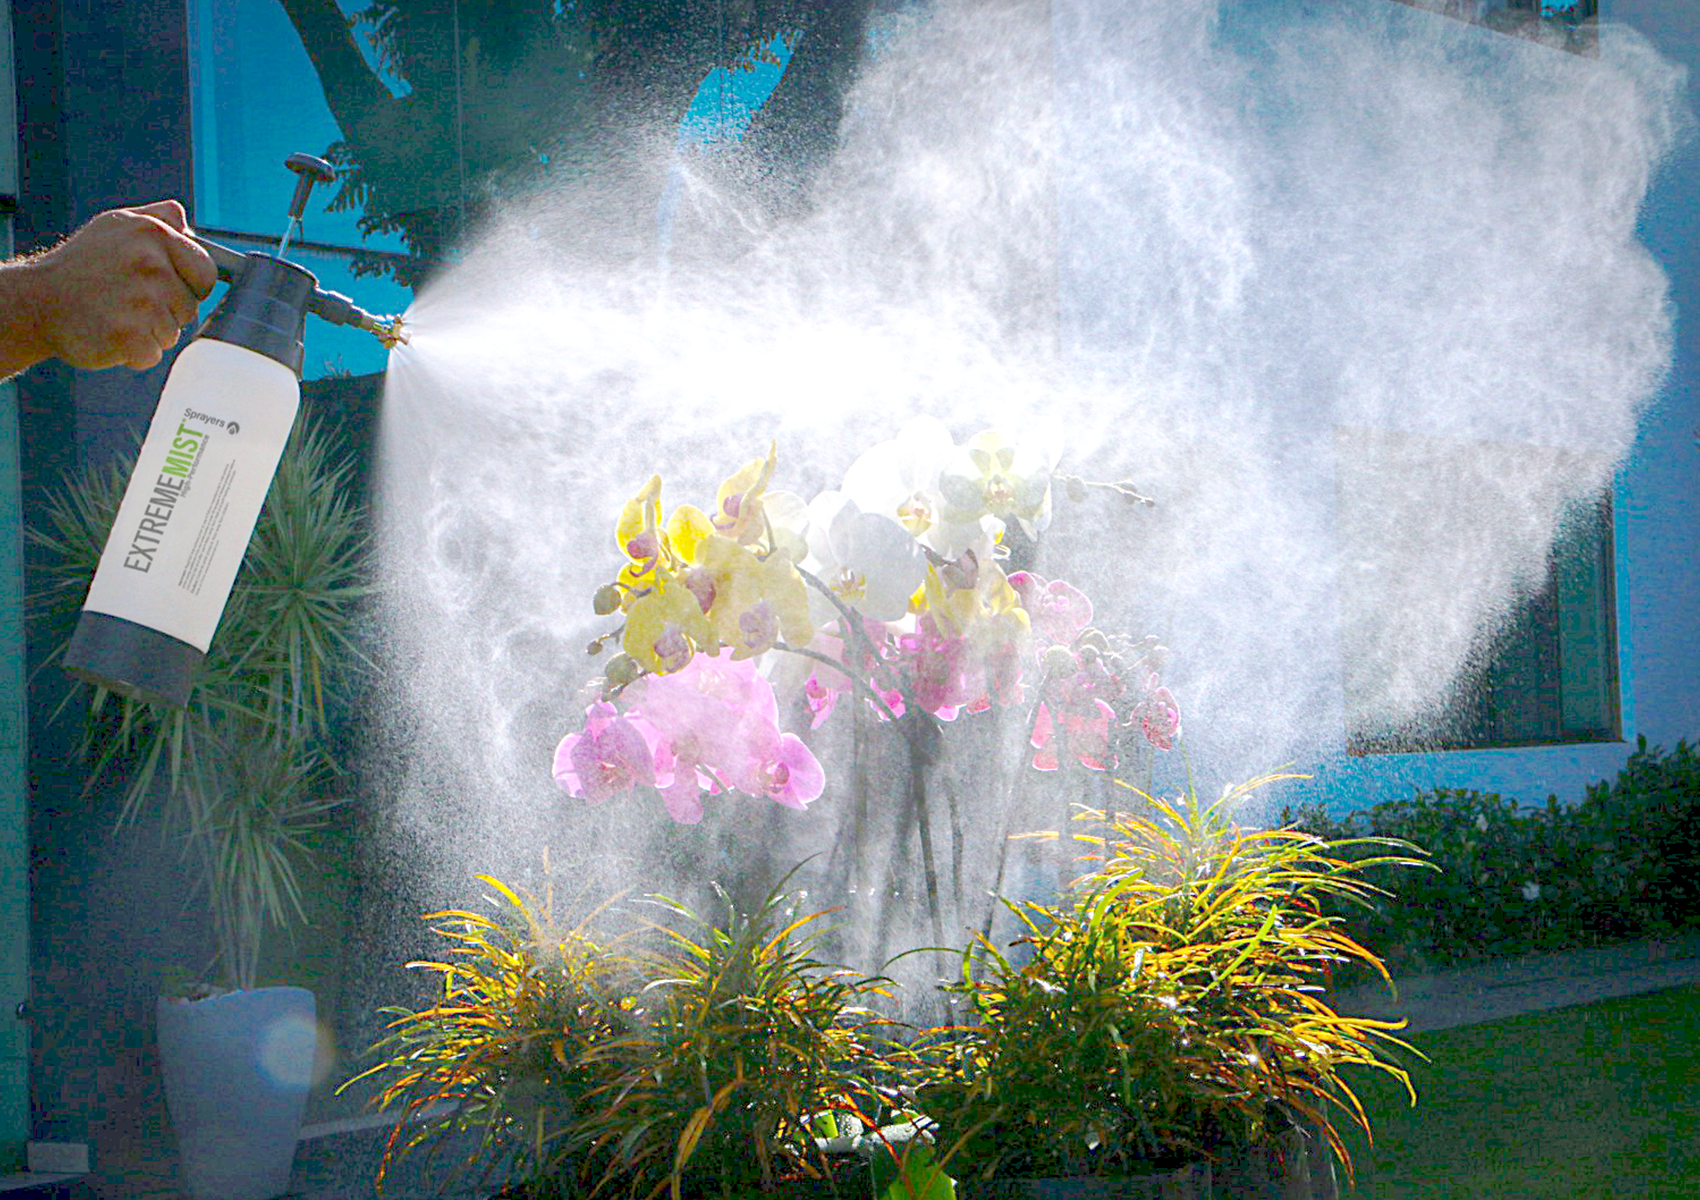 high-performance plant mister spraying flowers